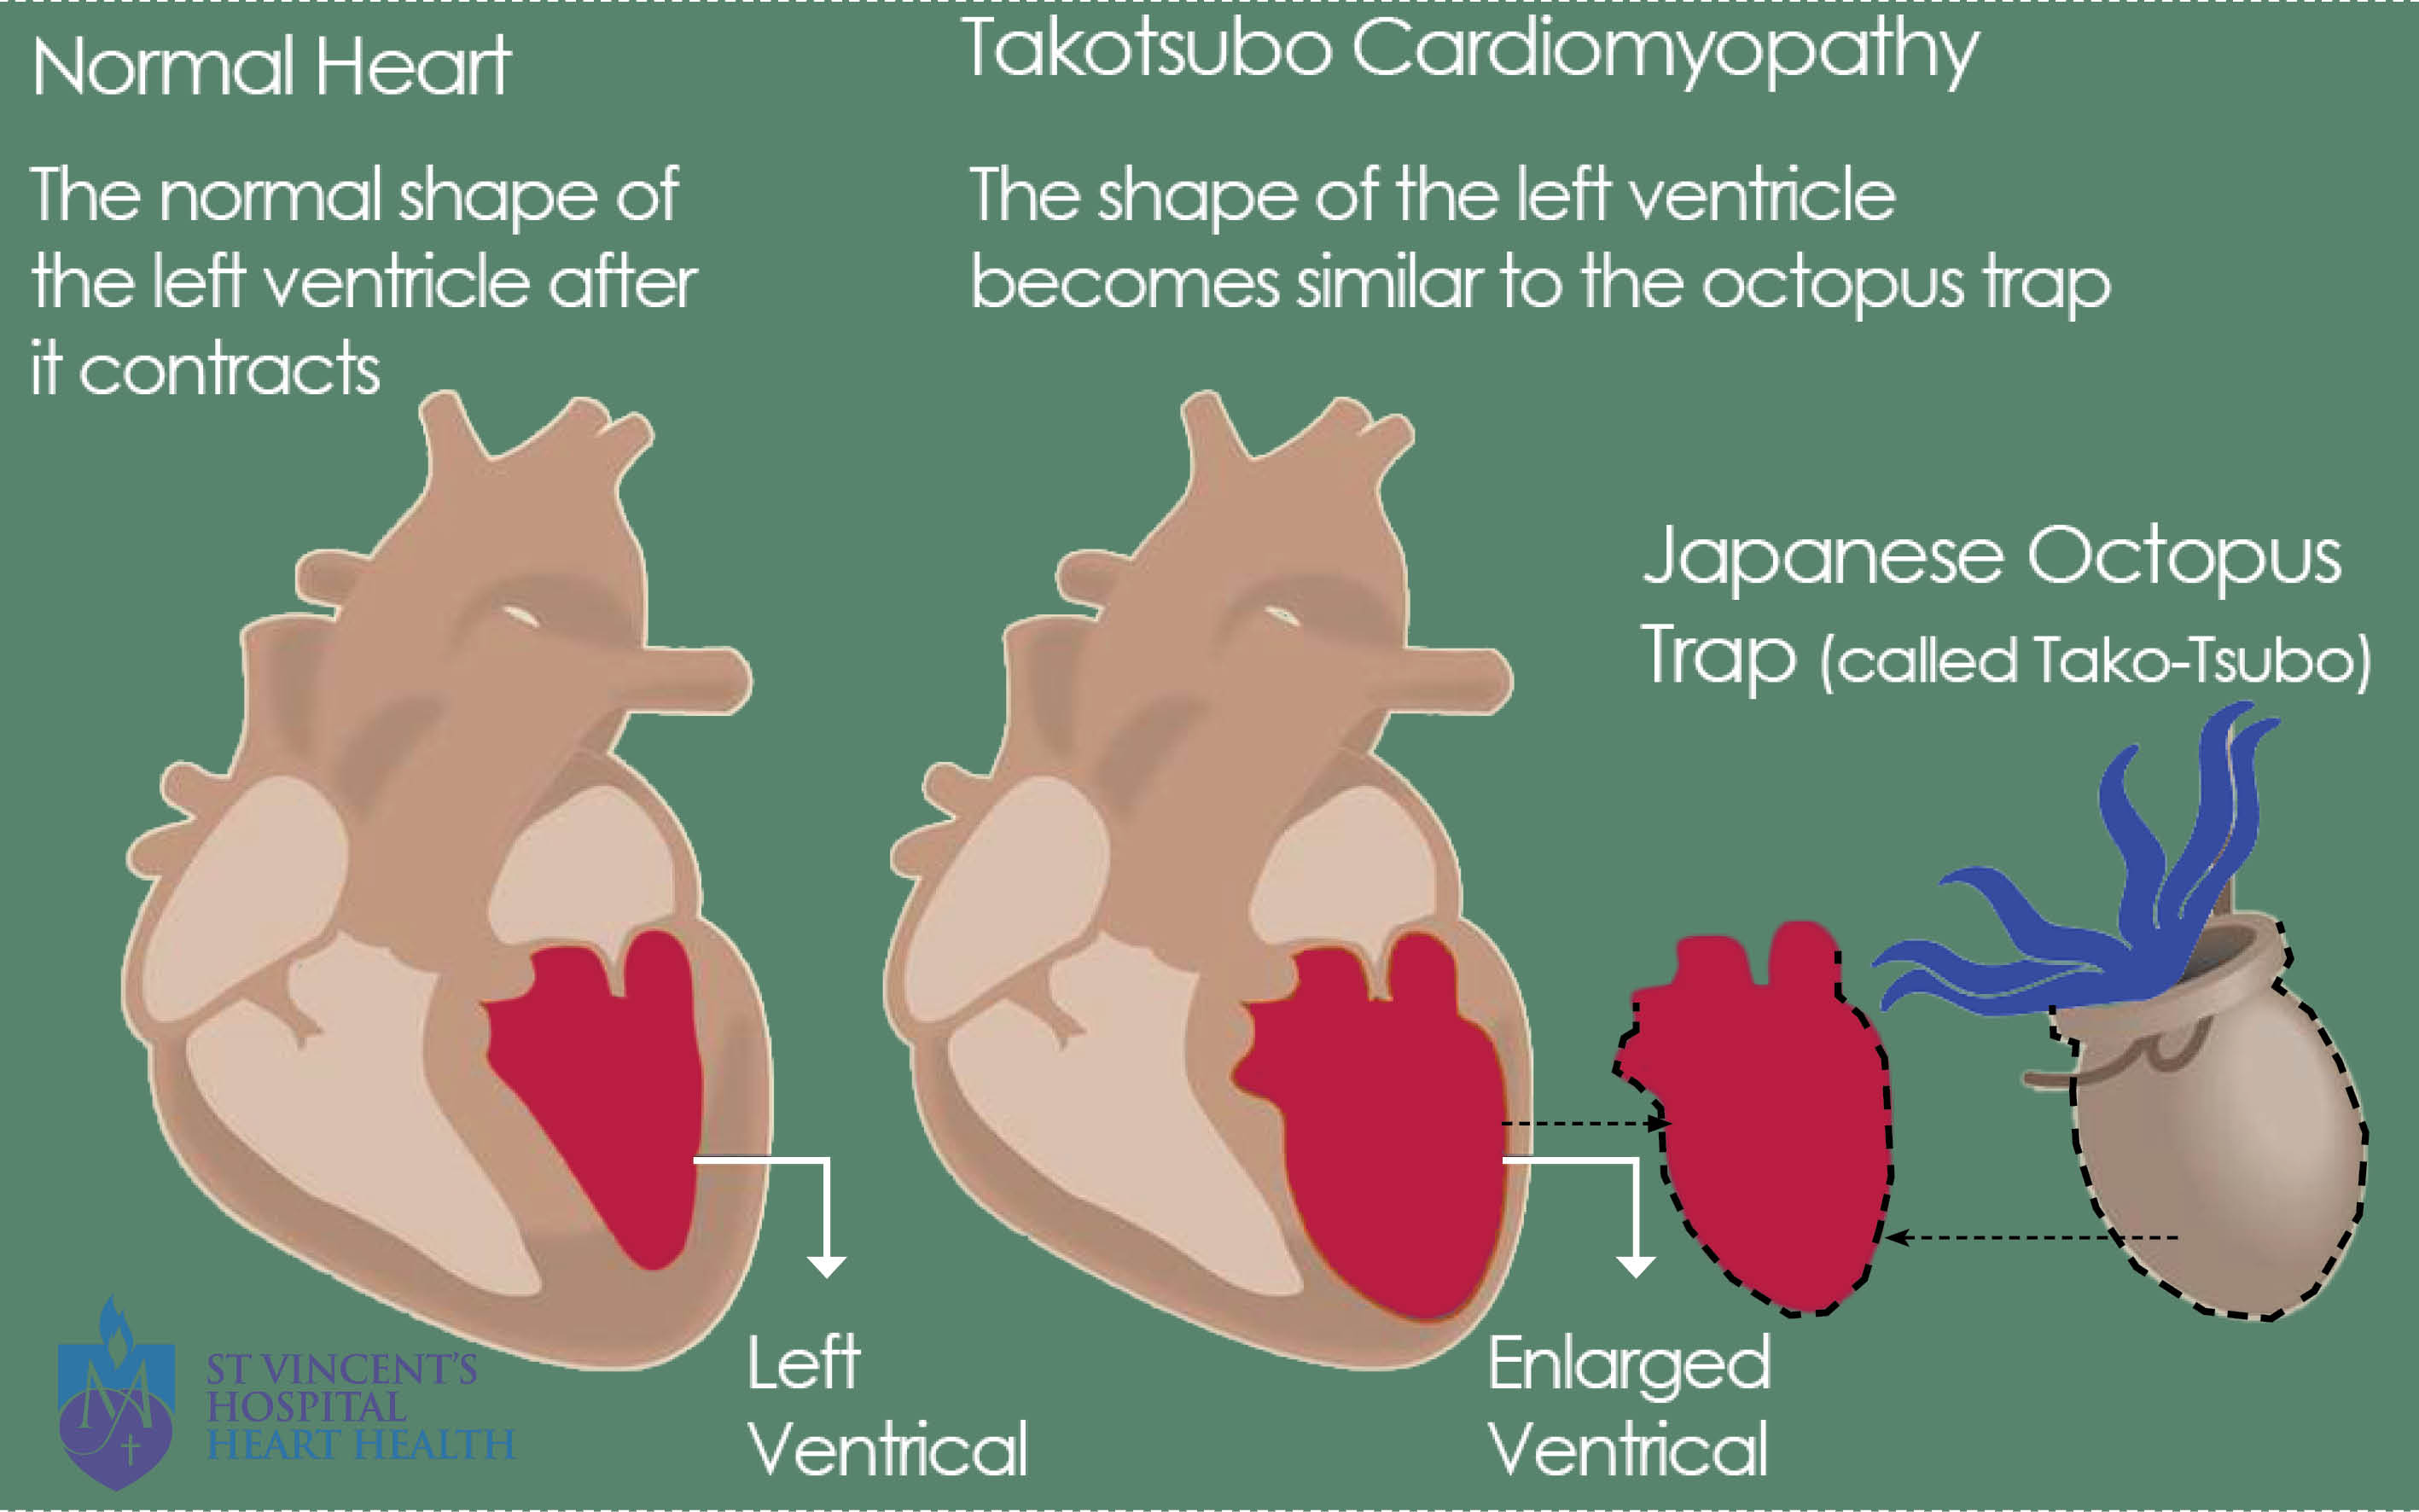 Takotsubo cardiomyopathy (broken heart syndrome): what is it